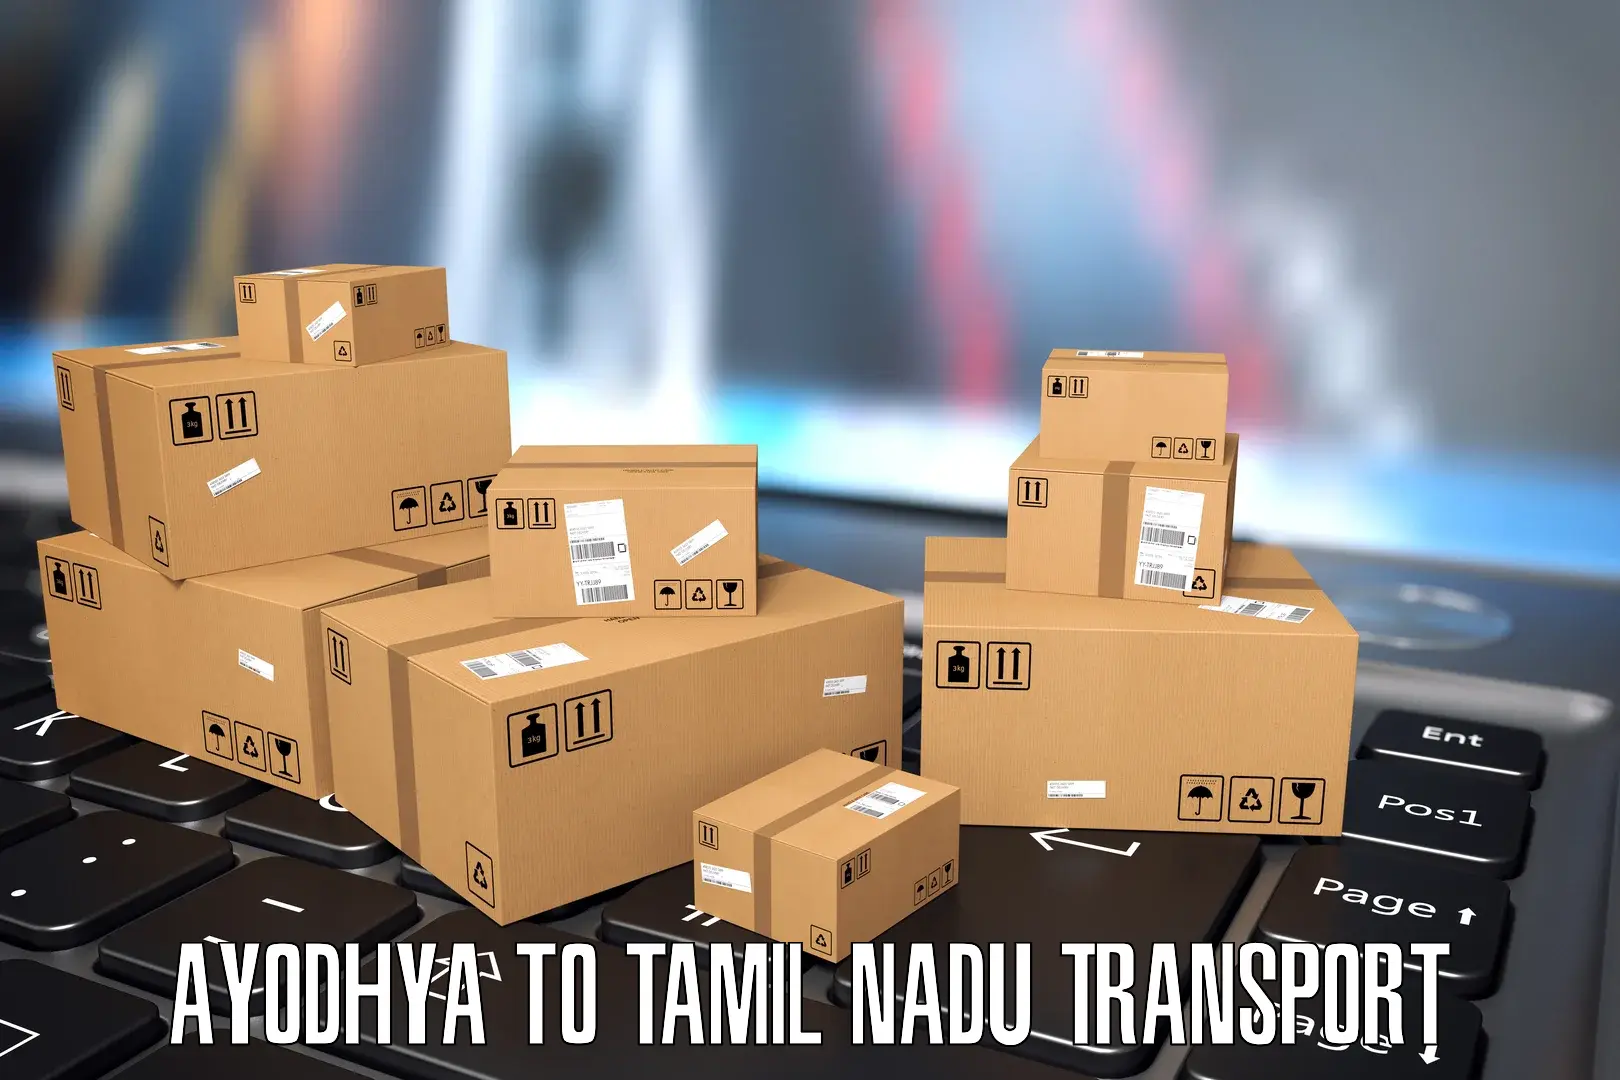 Nearby transport service Ayodhya to Tamil Nadu